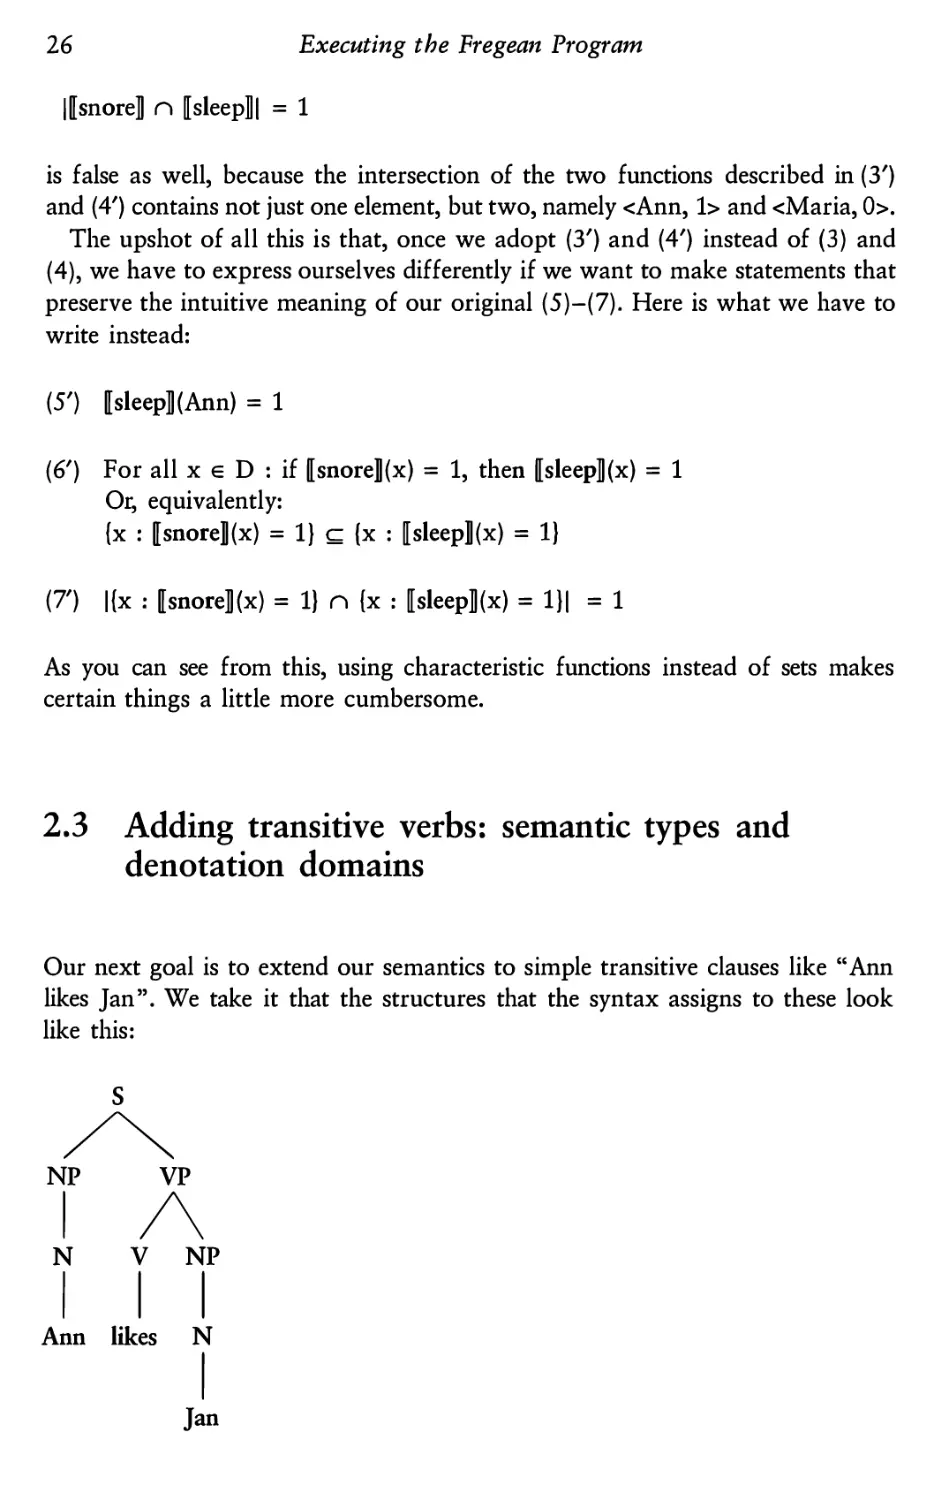 2.3 Adding transitive verbs: semantic types and denotation domains